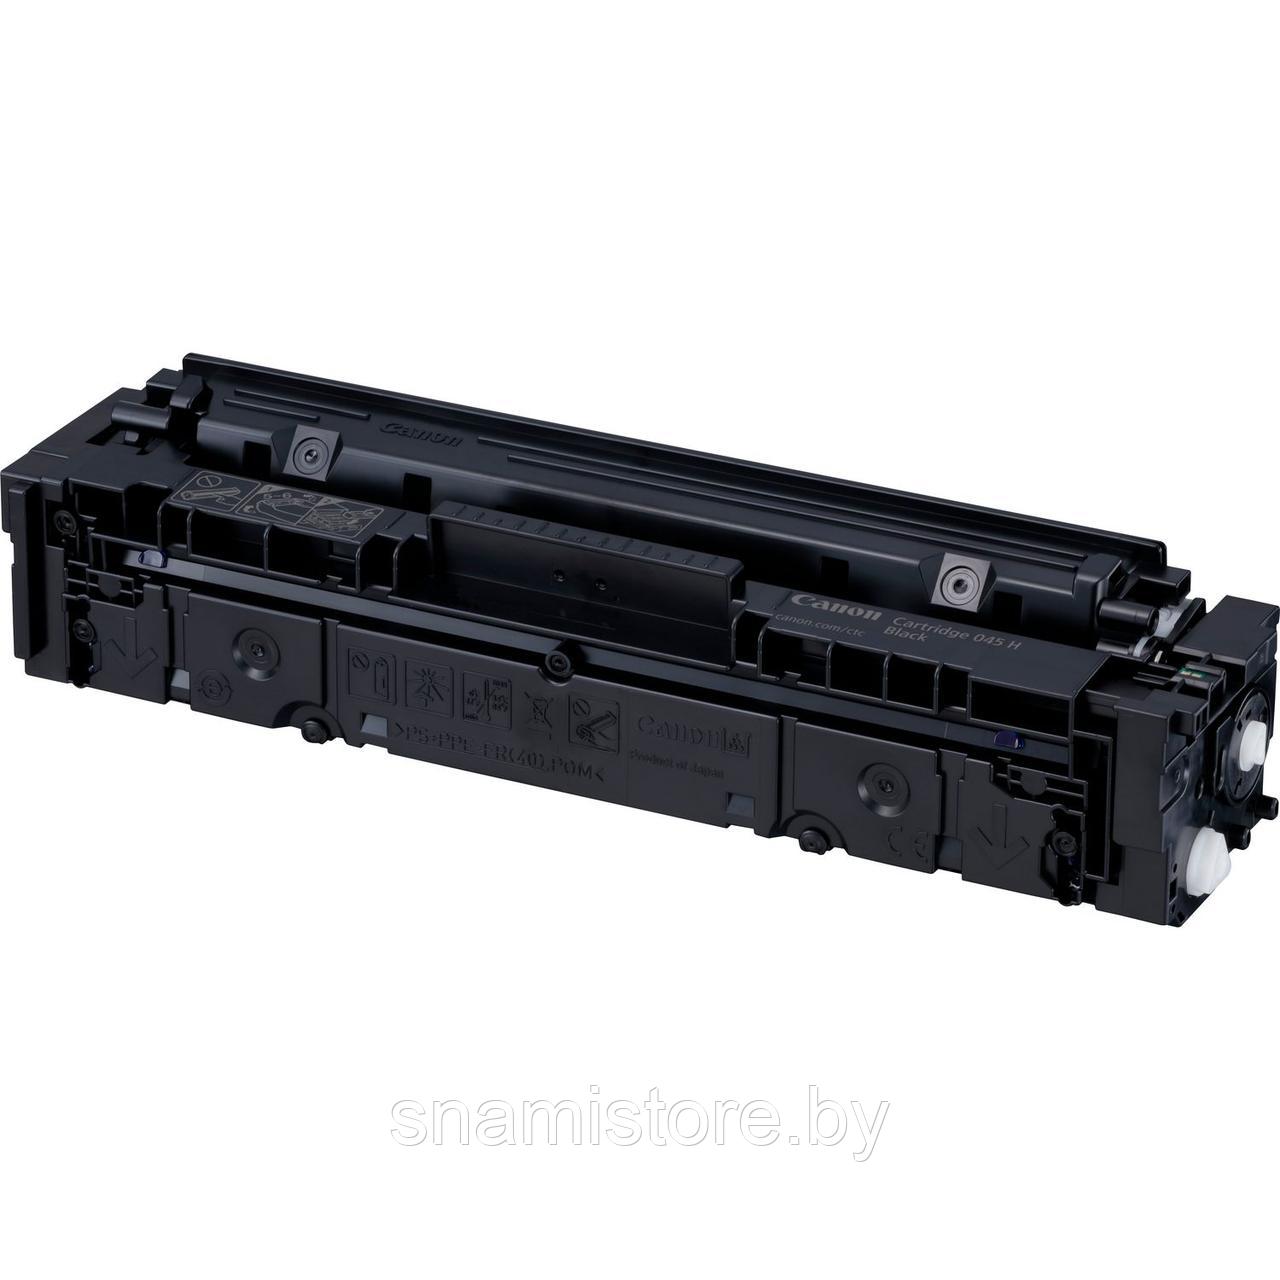 Тонер-картридж Canon CRG 045 H BK (black) 1246C002 для Canon i-SENSYS LBP-611/613/631/633/635